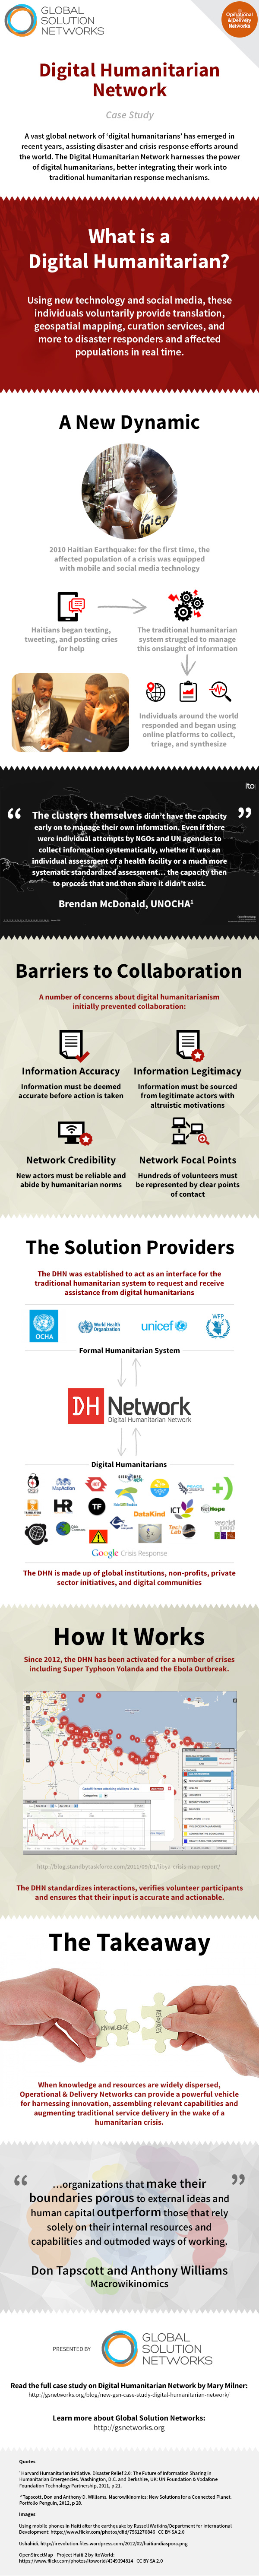 Digital Humanitarian Network Infographic